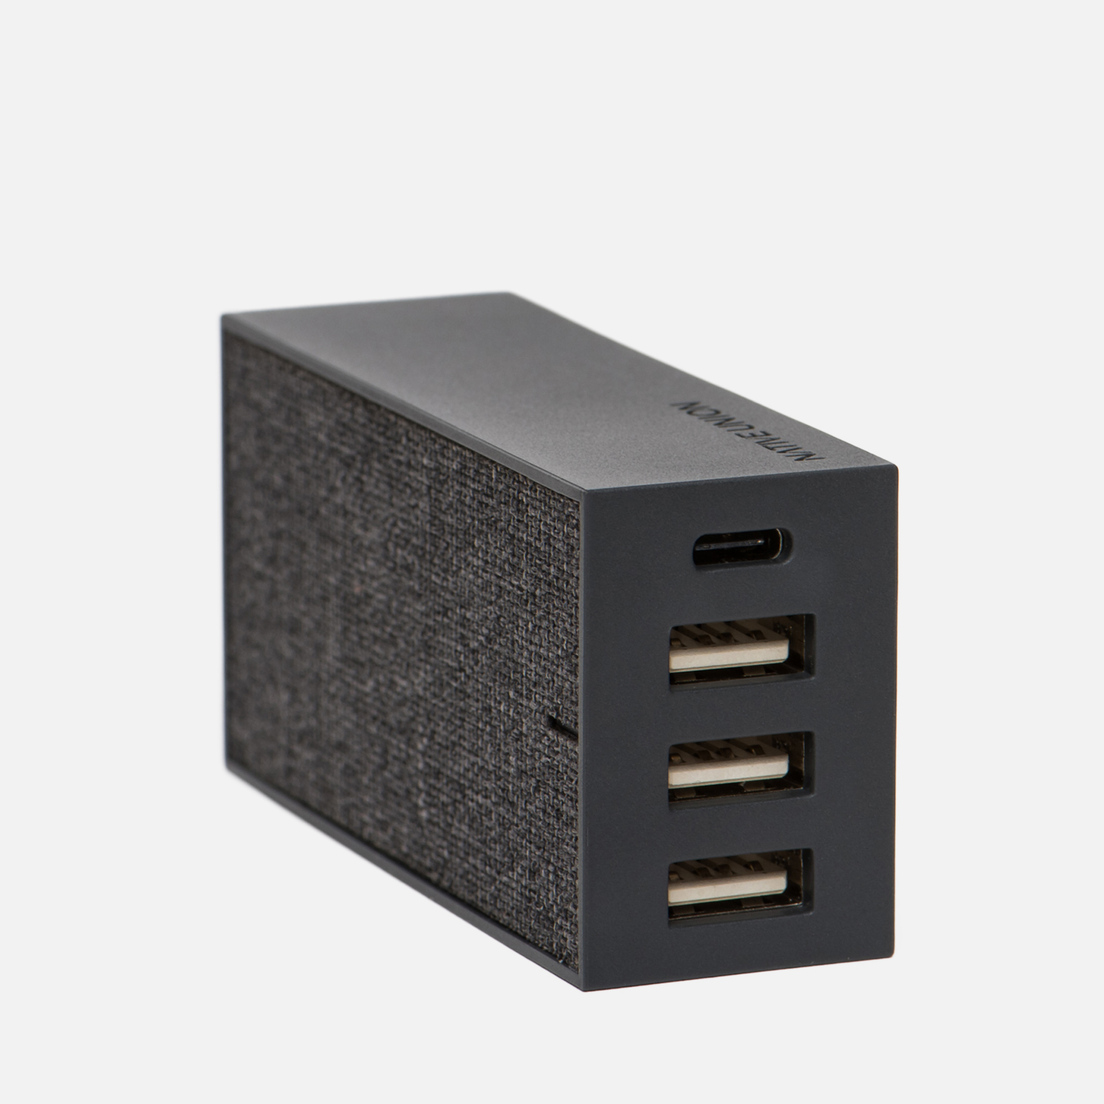 Native Union Сетевое зарядное устройство Smart Charger 4 Port USB/USB Type-C 5.4A